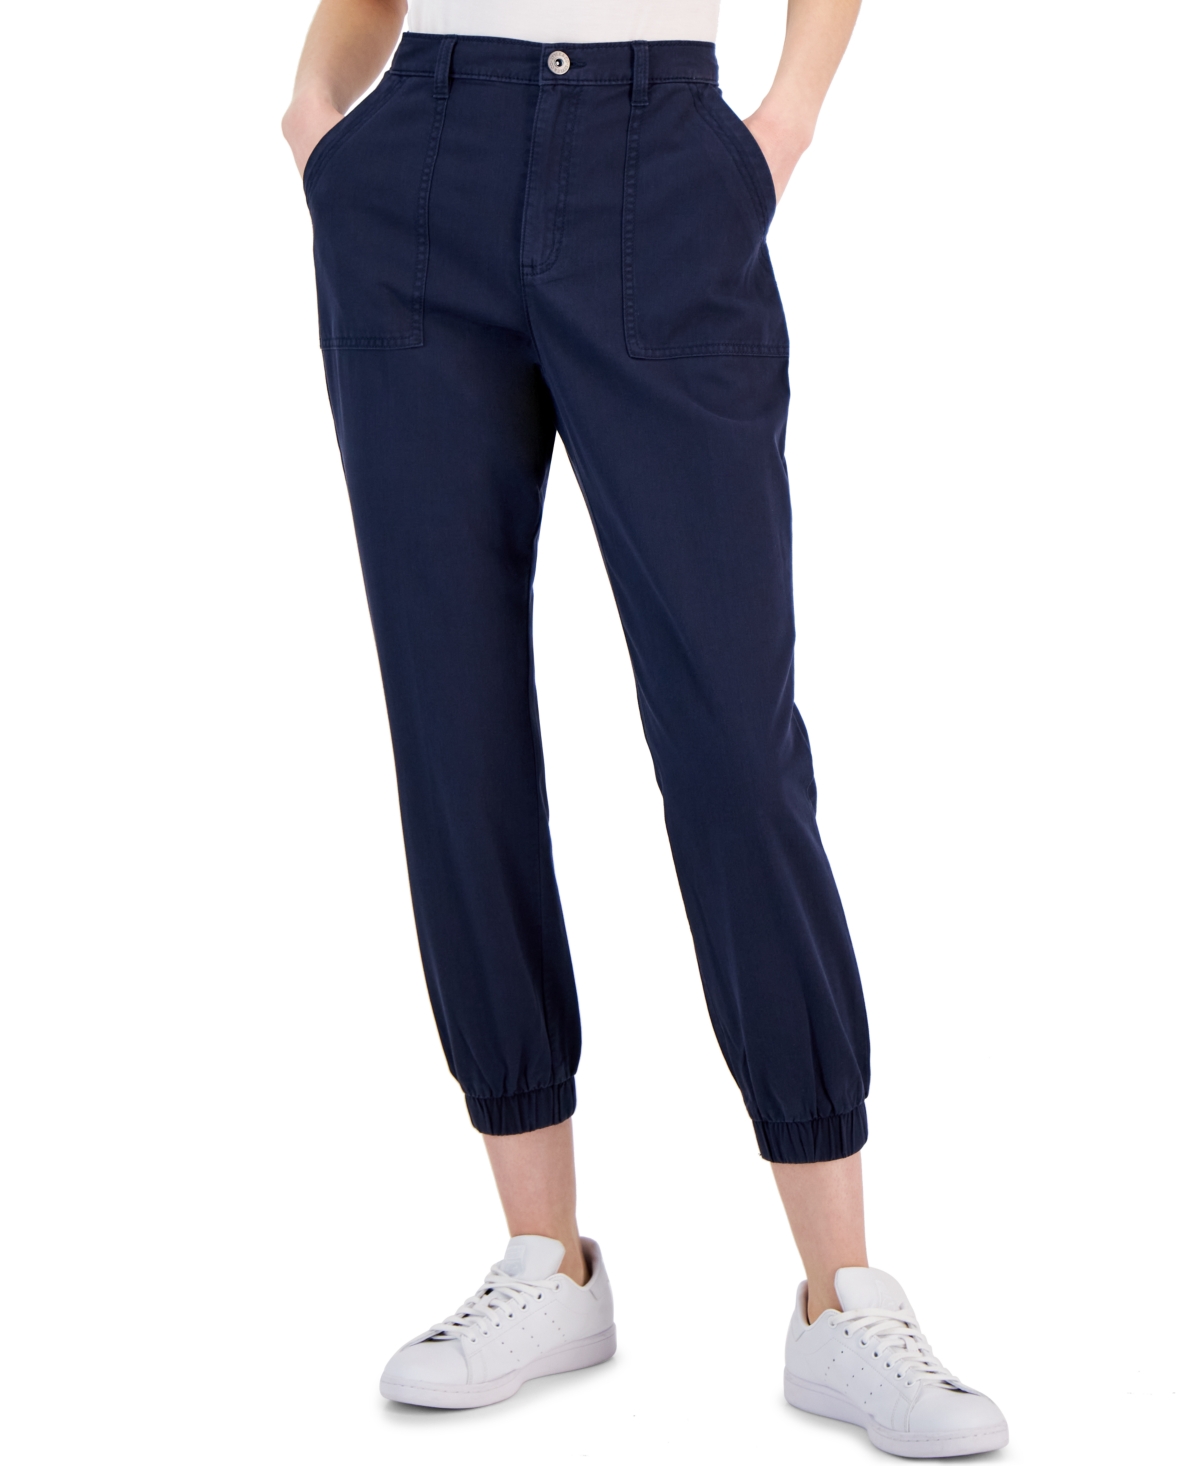 Women's High-Rise Straight-Leg Corduroy Pants, Created for Macy's